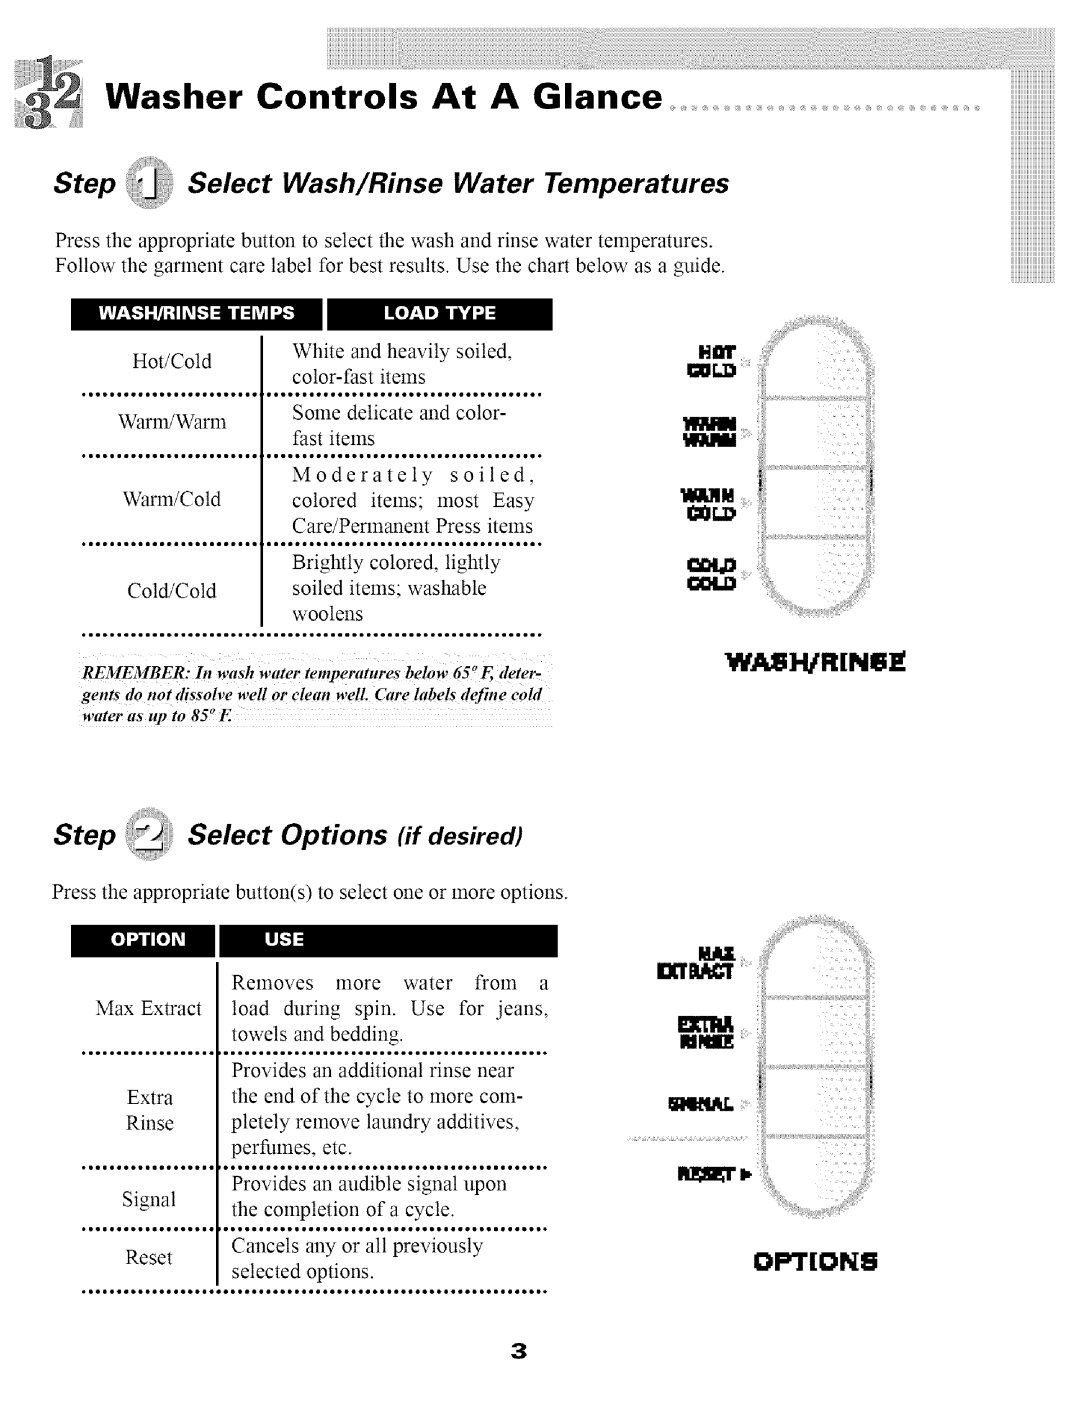 Maytag SL-3 warranty Step, Select Options Of desired, Wa -I/Rn, OPTON8 